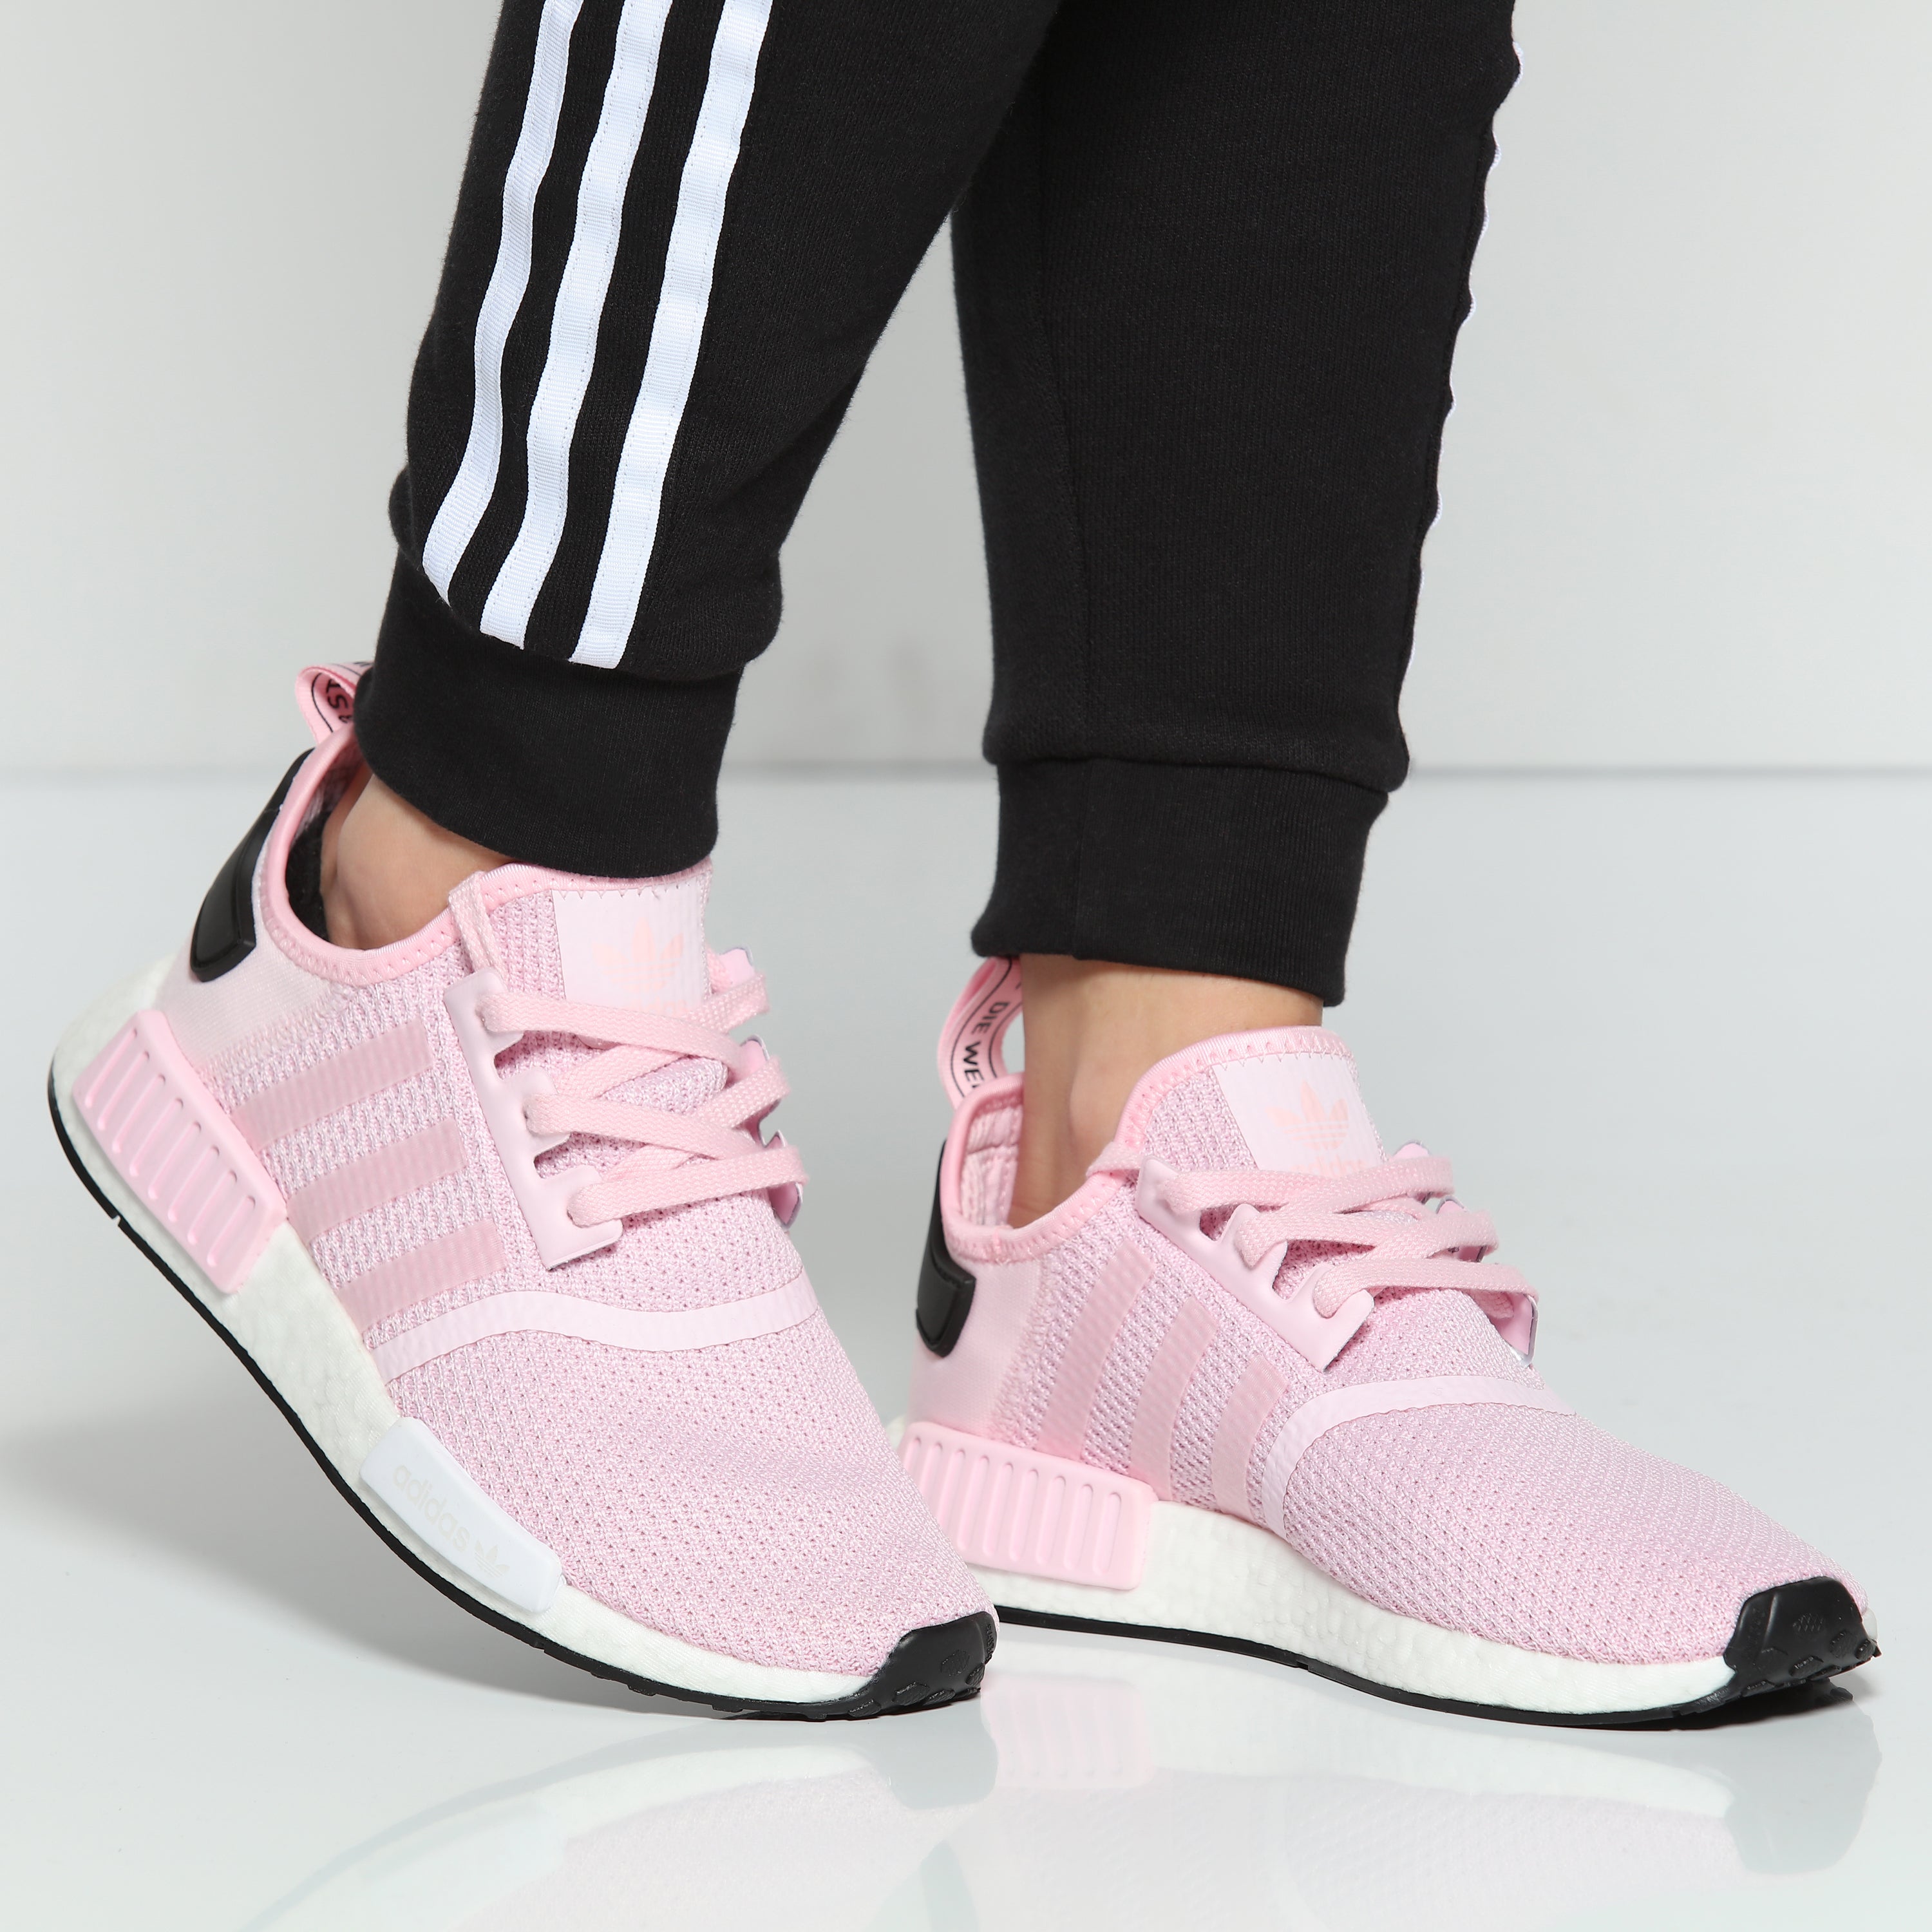 adidas nmd r1 pink womens